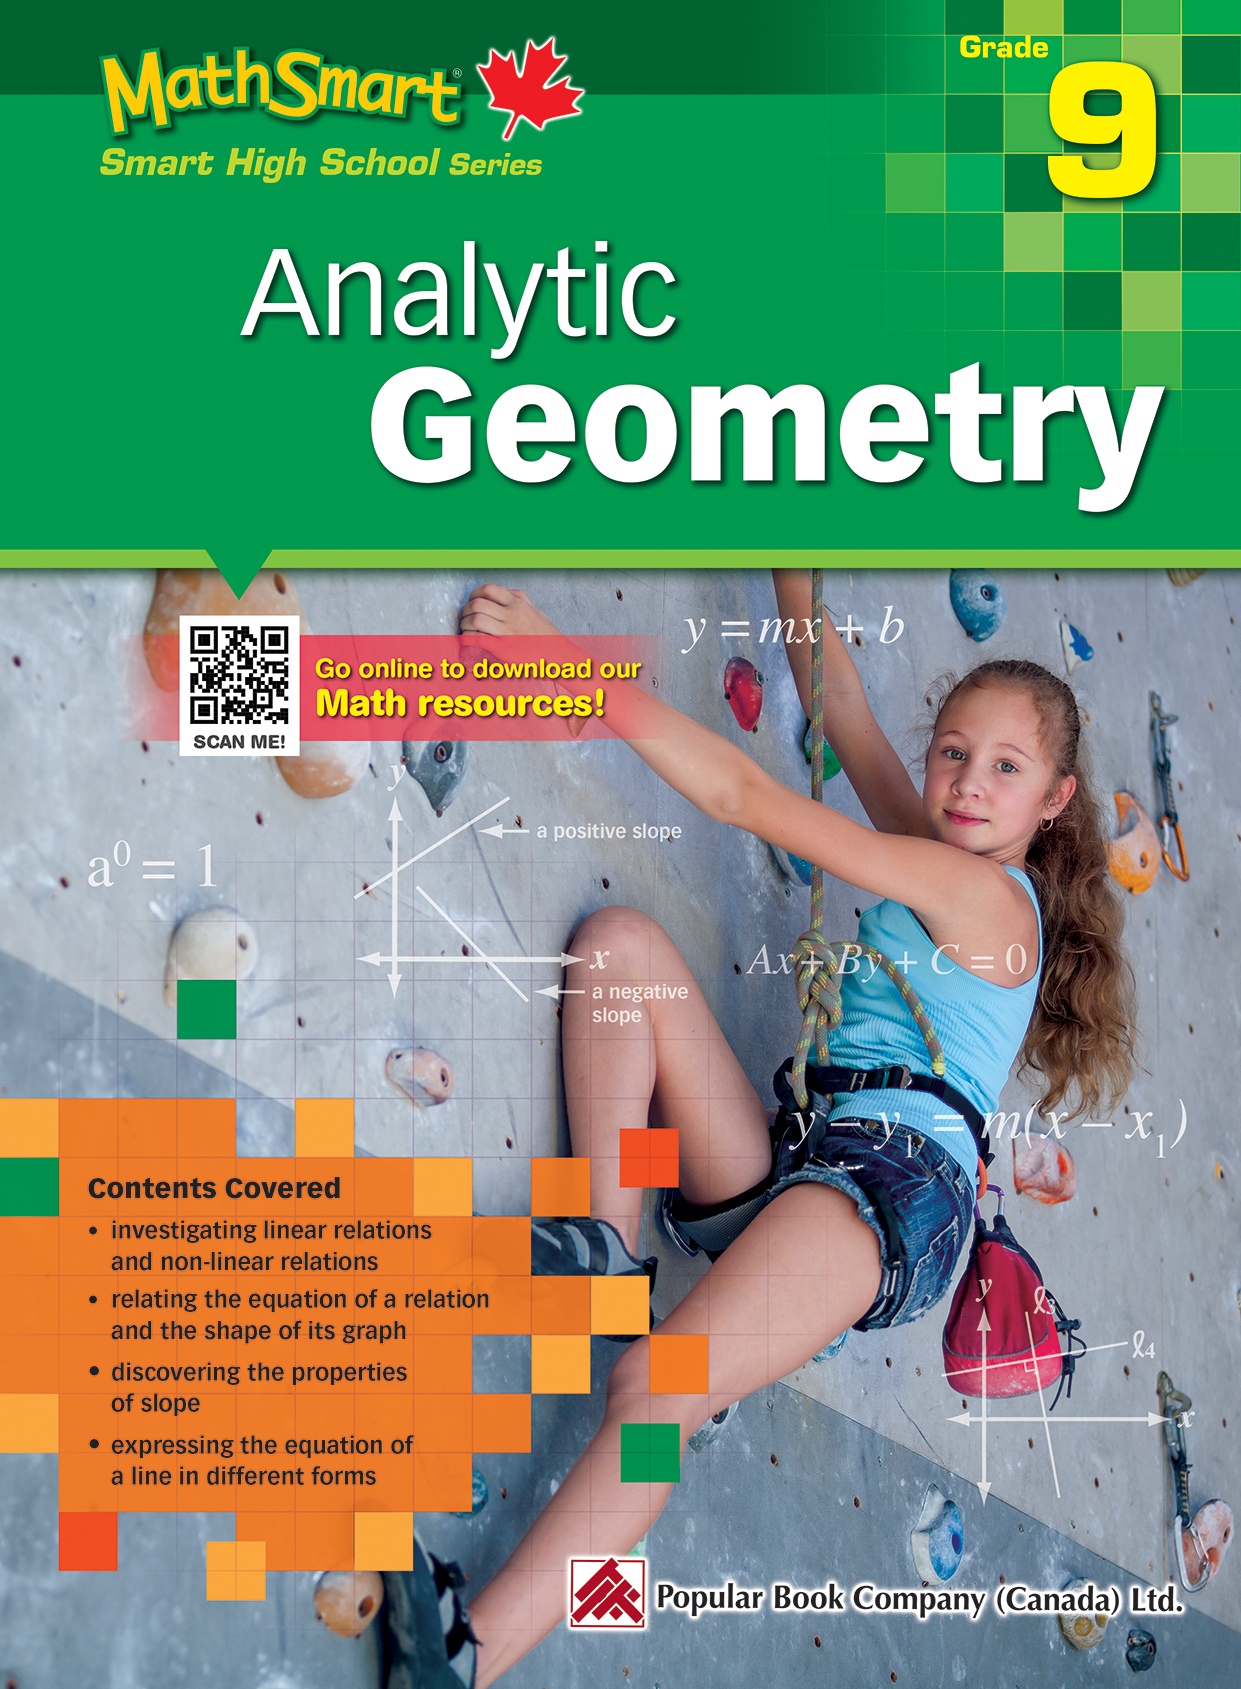 mathsmart-analytic-geometry-grade-9-book-popular-book-company